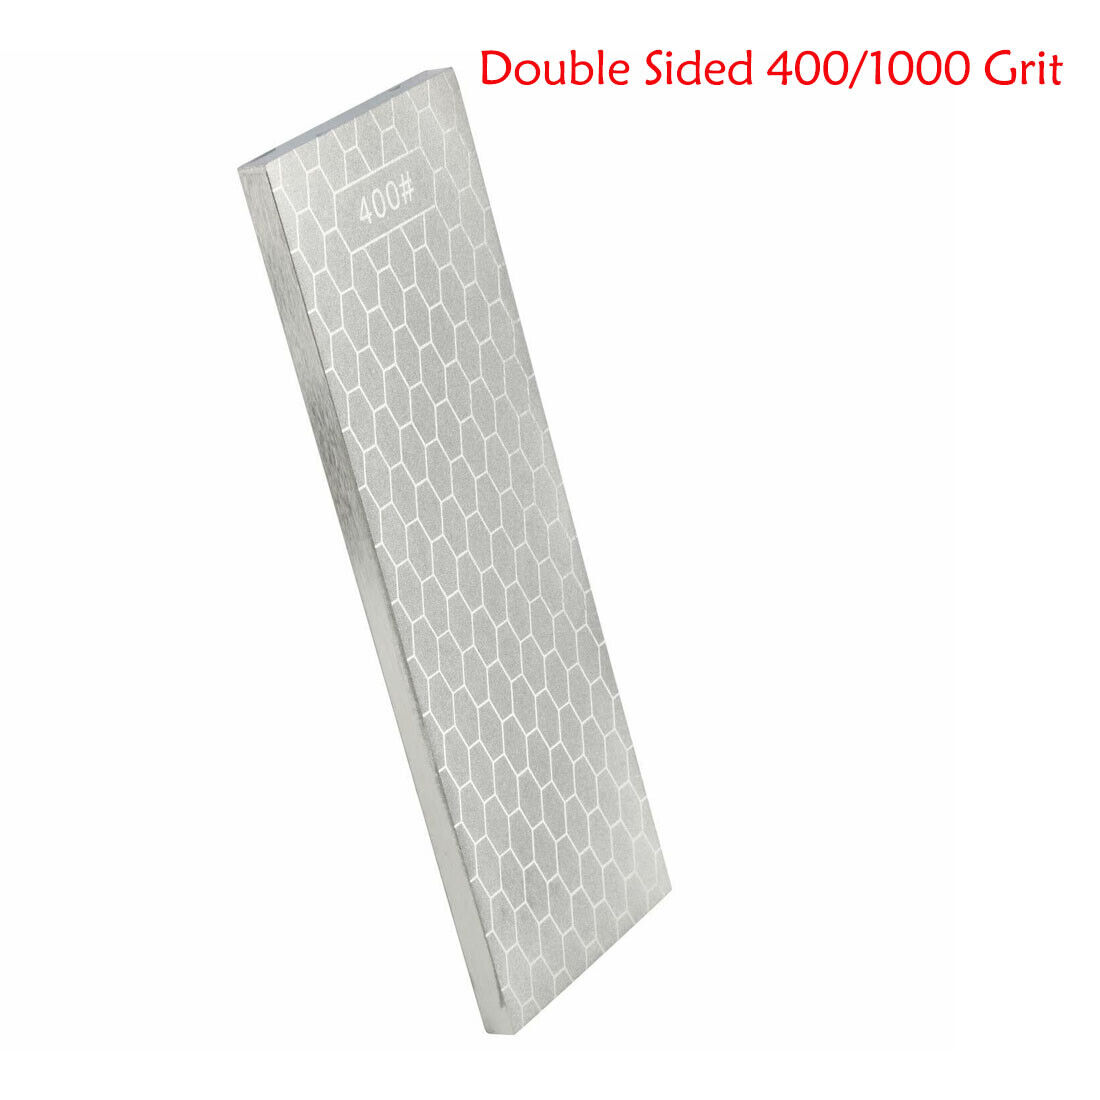 8 in Double Sided 400/1000 Grit Diamond Sharpening Bench Stone Knife Sharpener